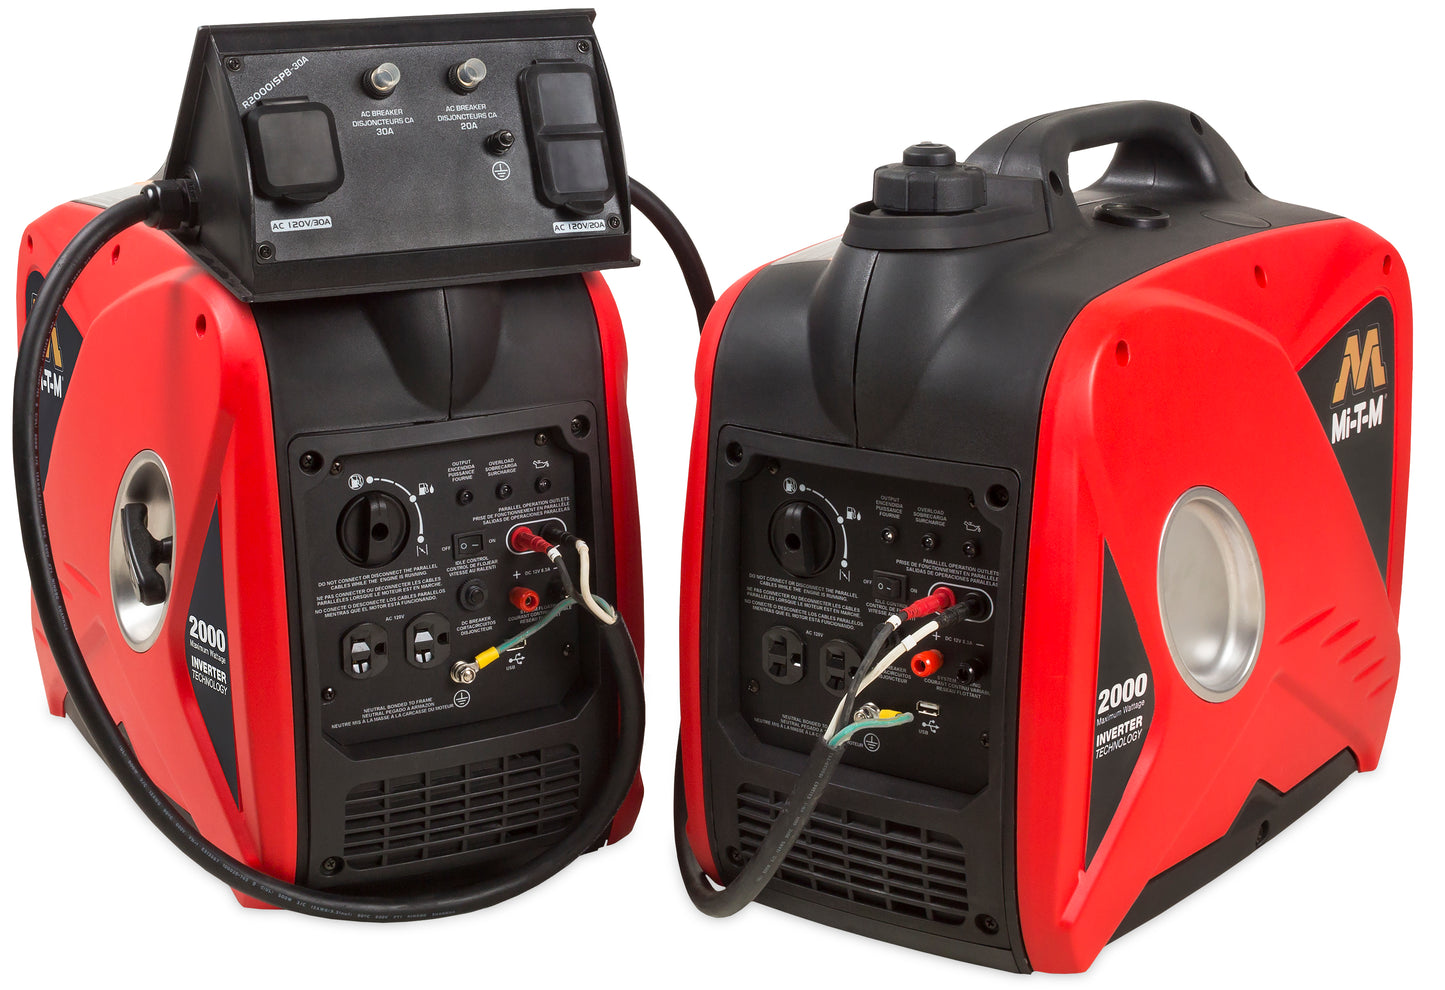 Hanson 2000 and 3000 Watt Gasoline Inverter Portable Generators